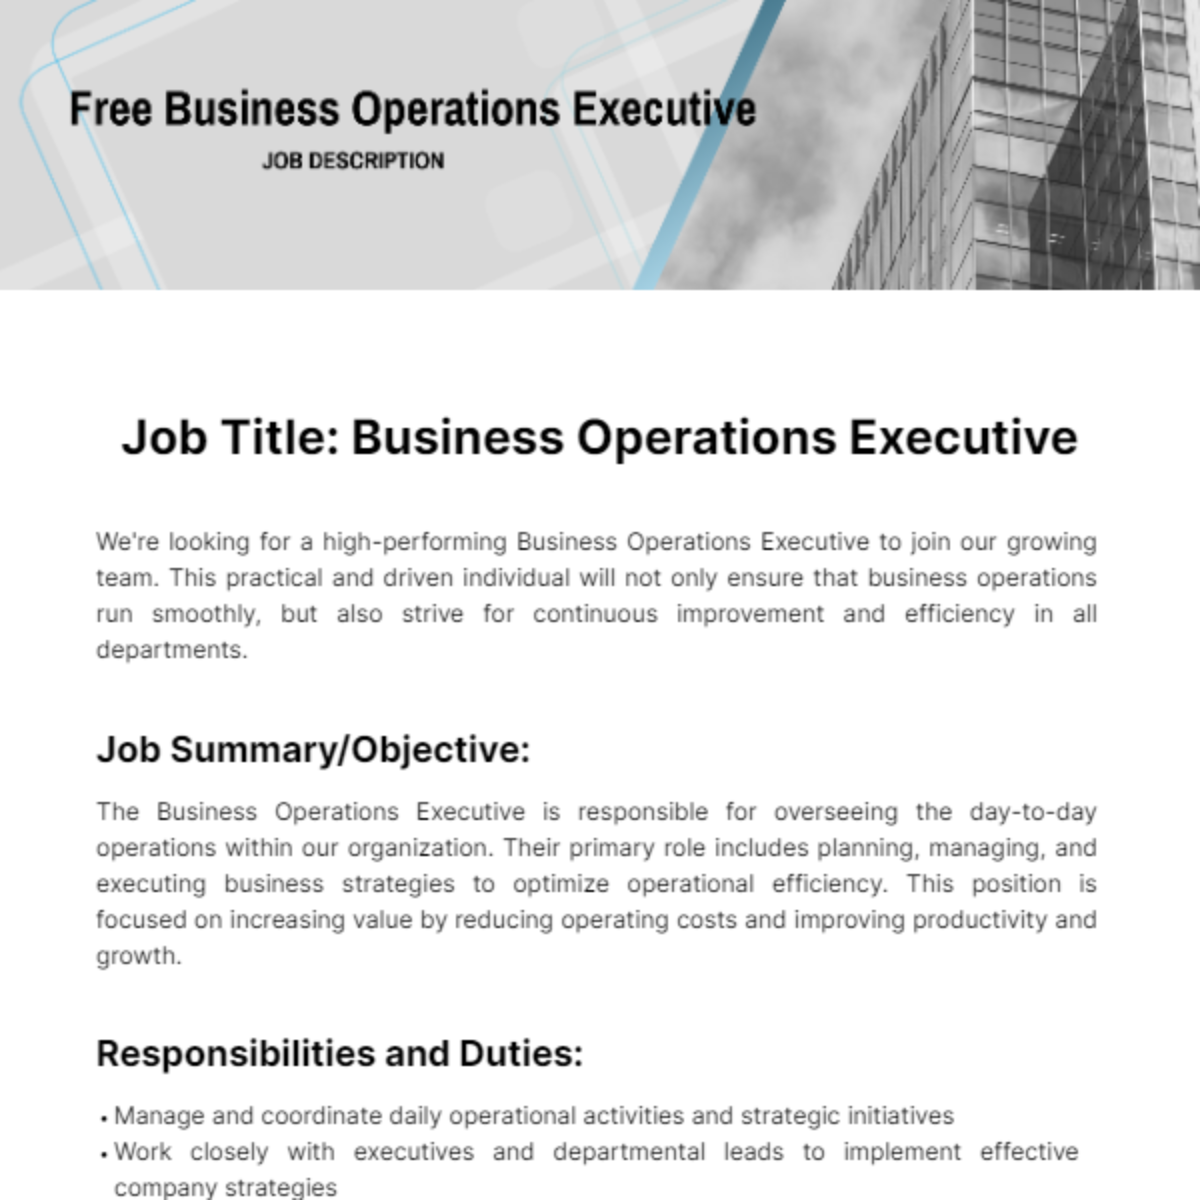 Free Business Operations Executive Job Description Template